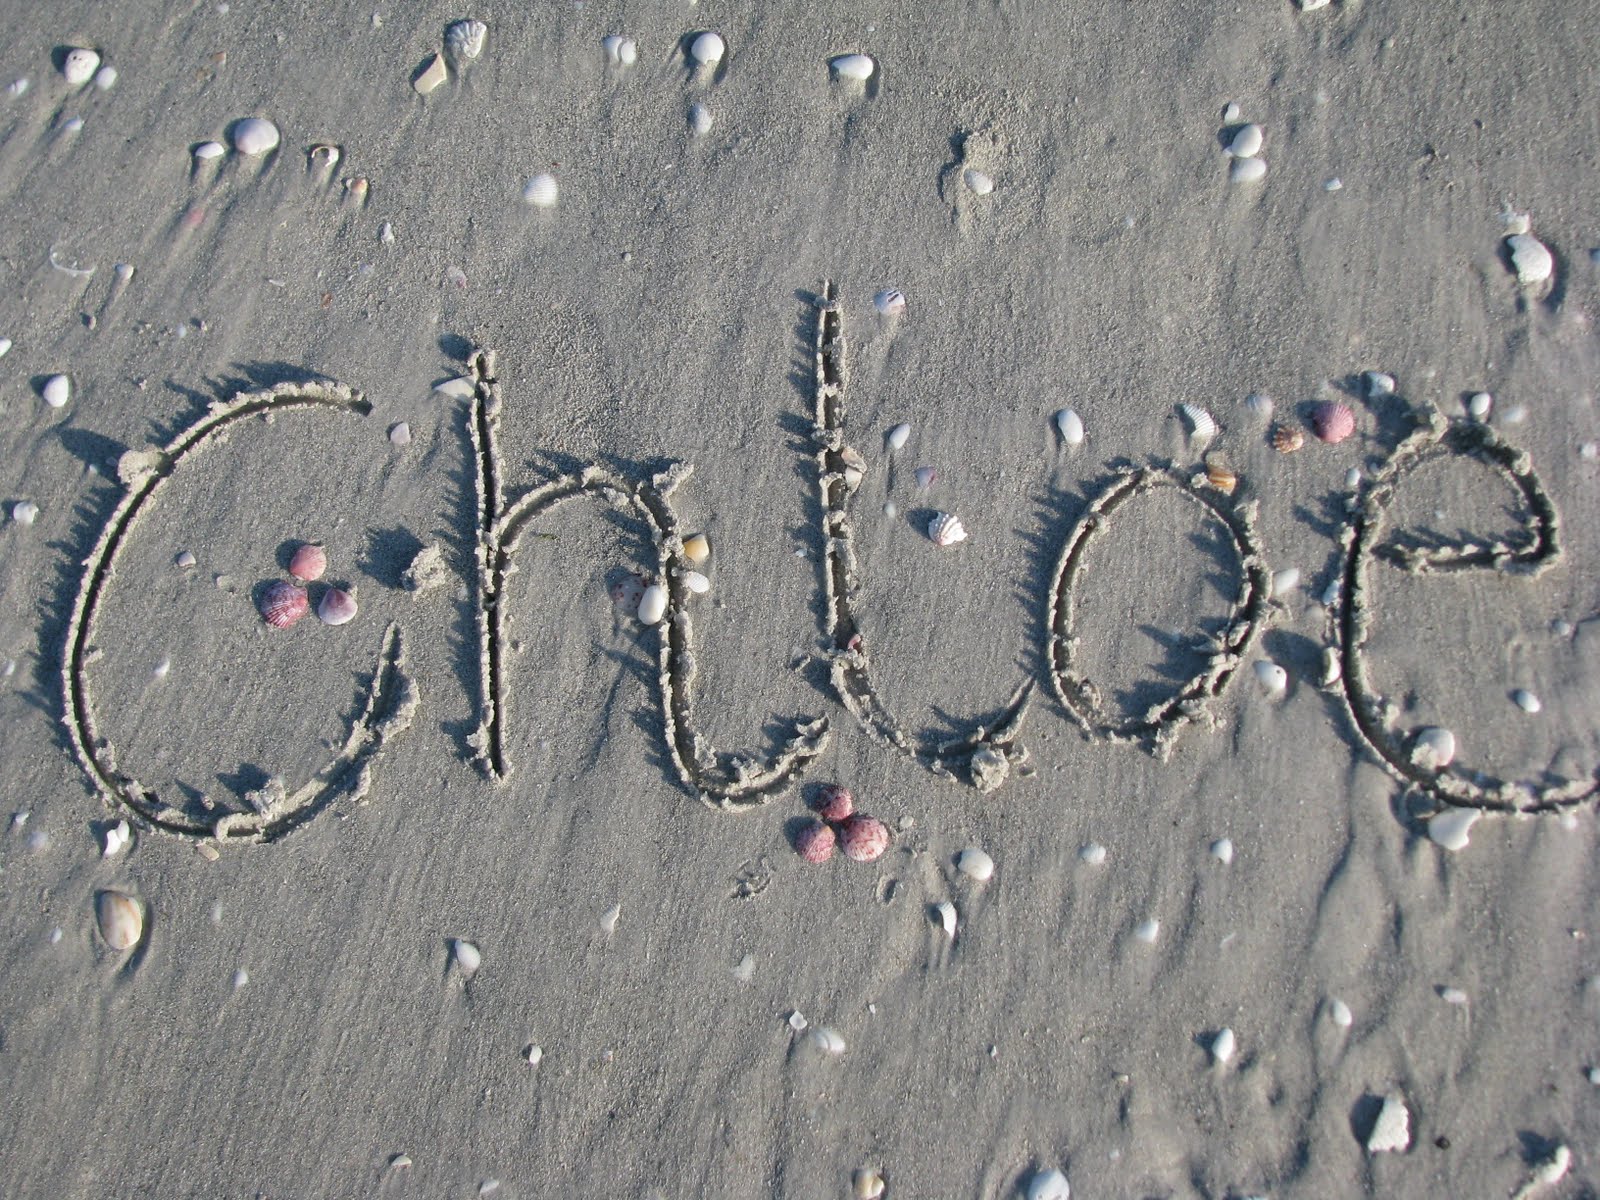 127 Chloe Name Images Stock Photos  Vectors  Shutterstock